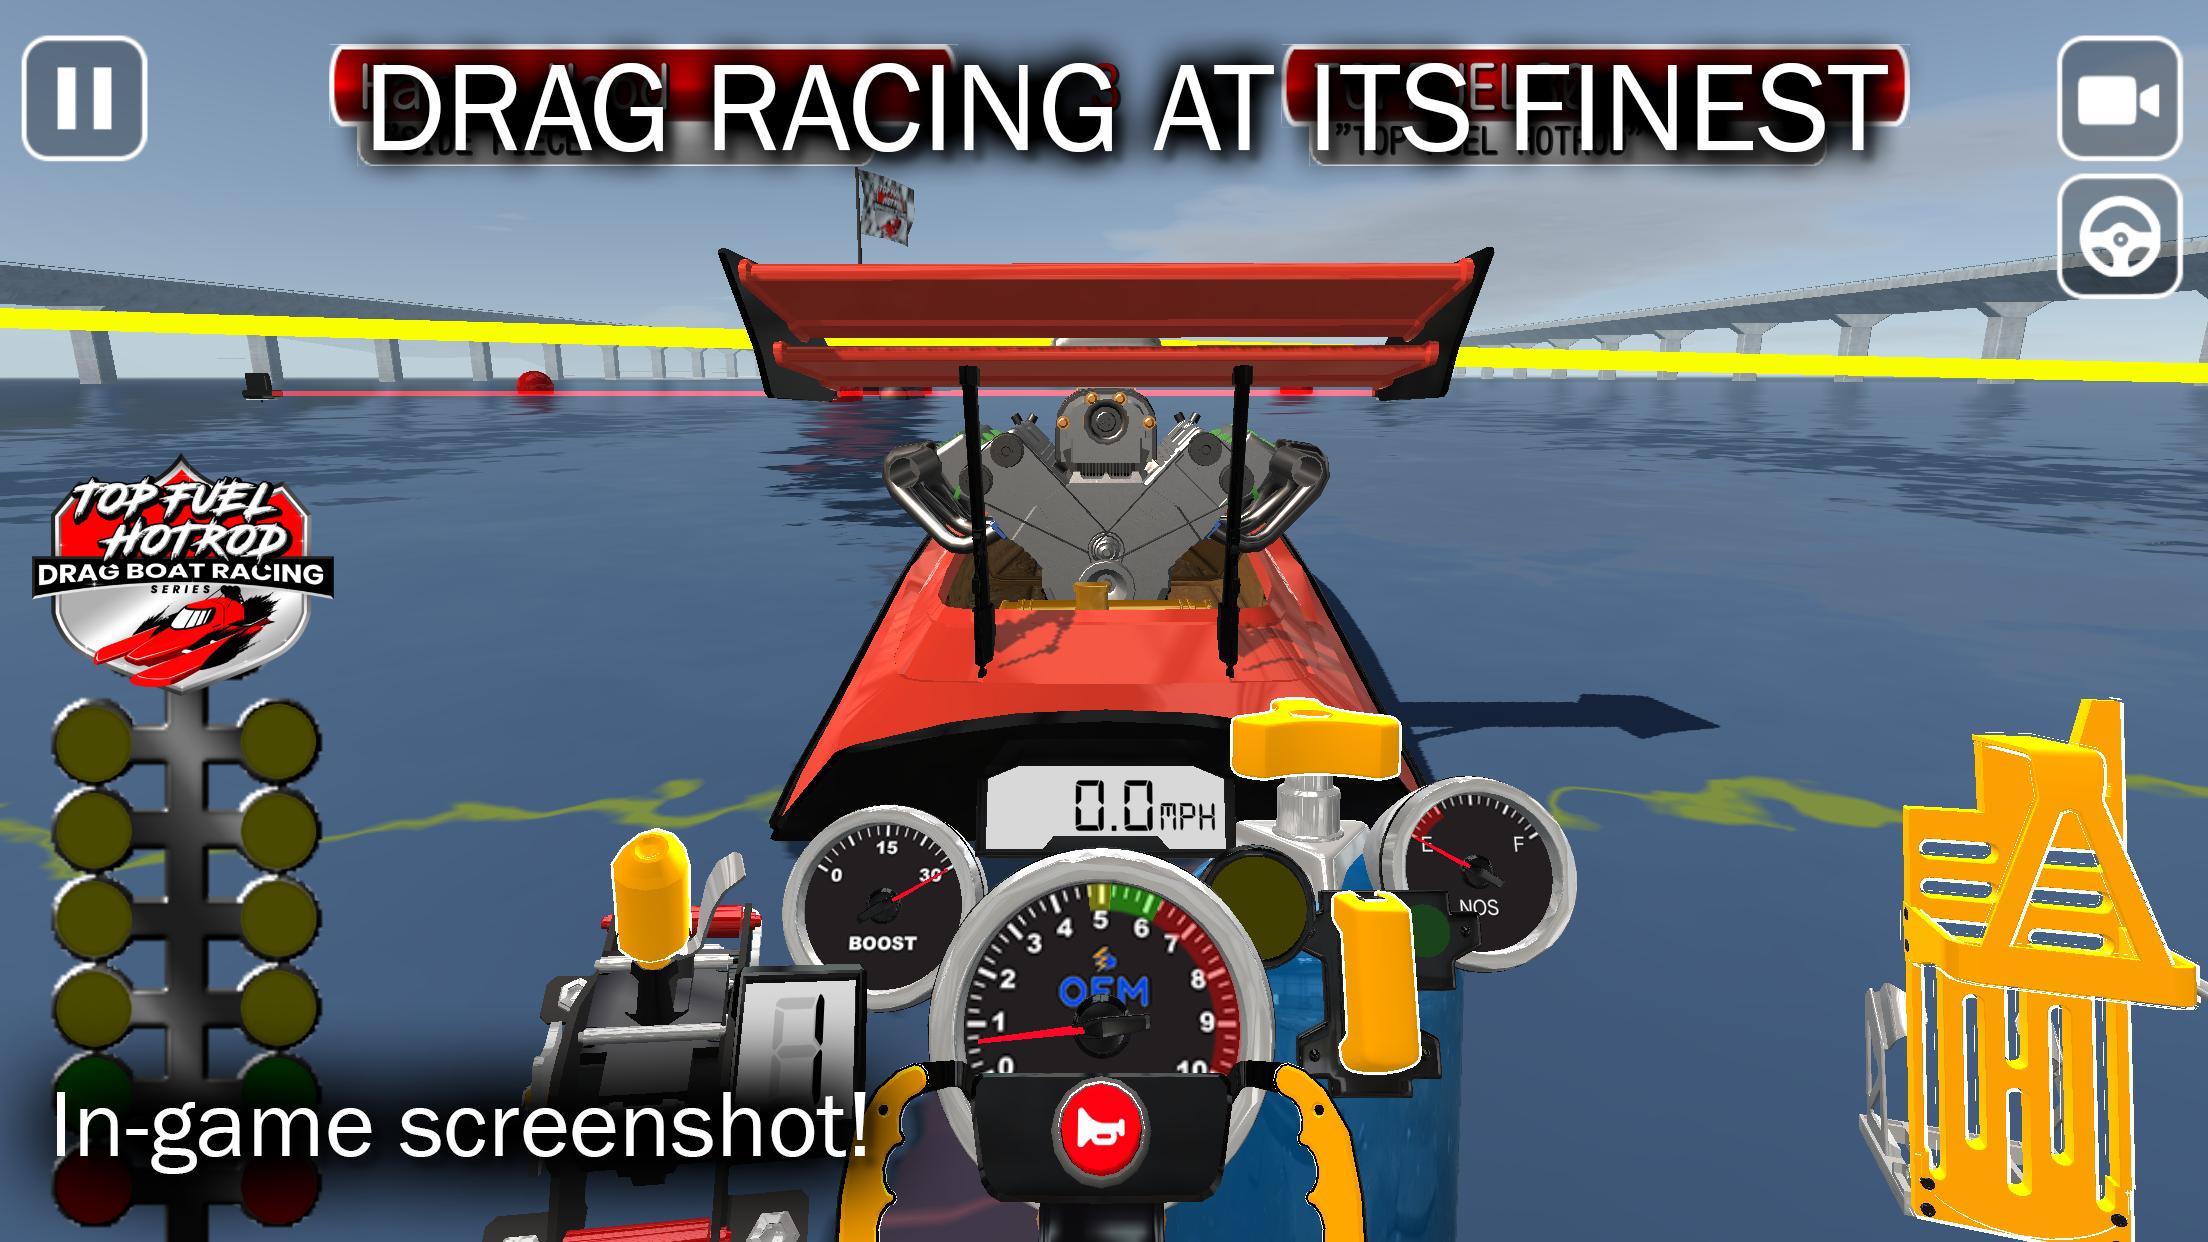 Top Fuel Hot Rod - Drag Boat Speed Racing Game 1.16 Screenshot 3